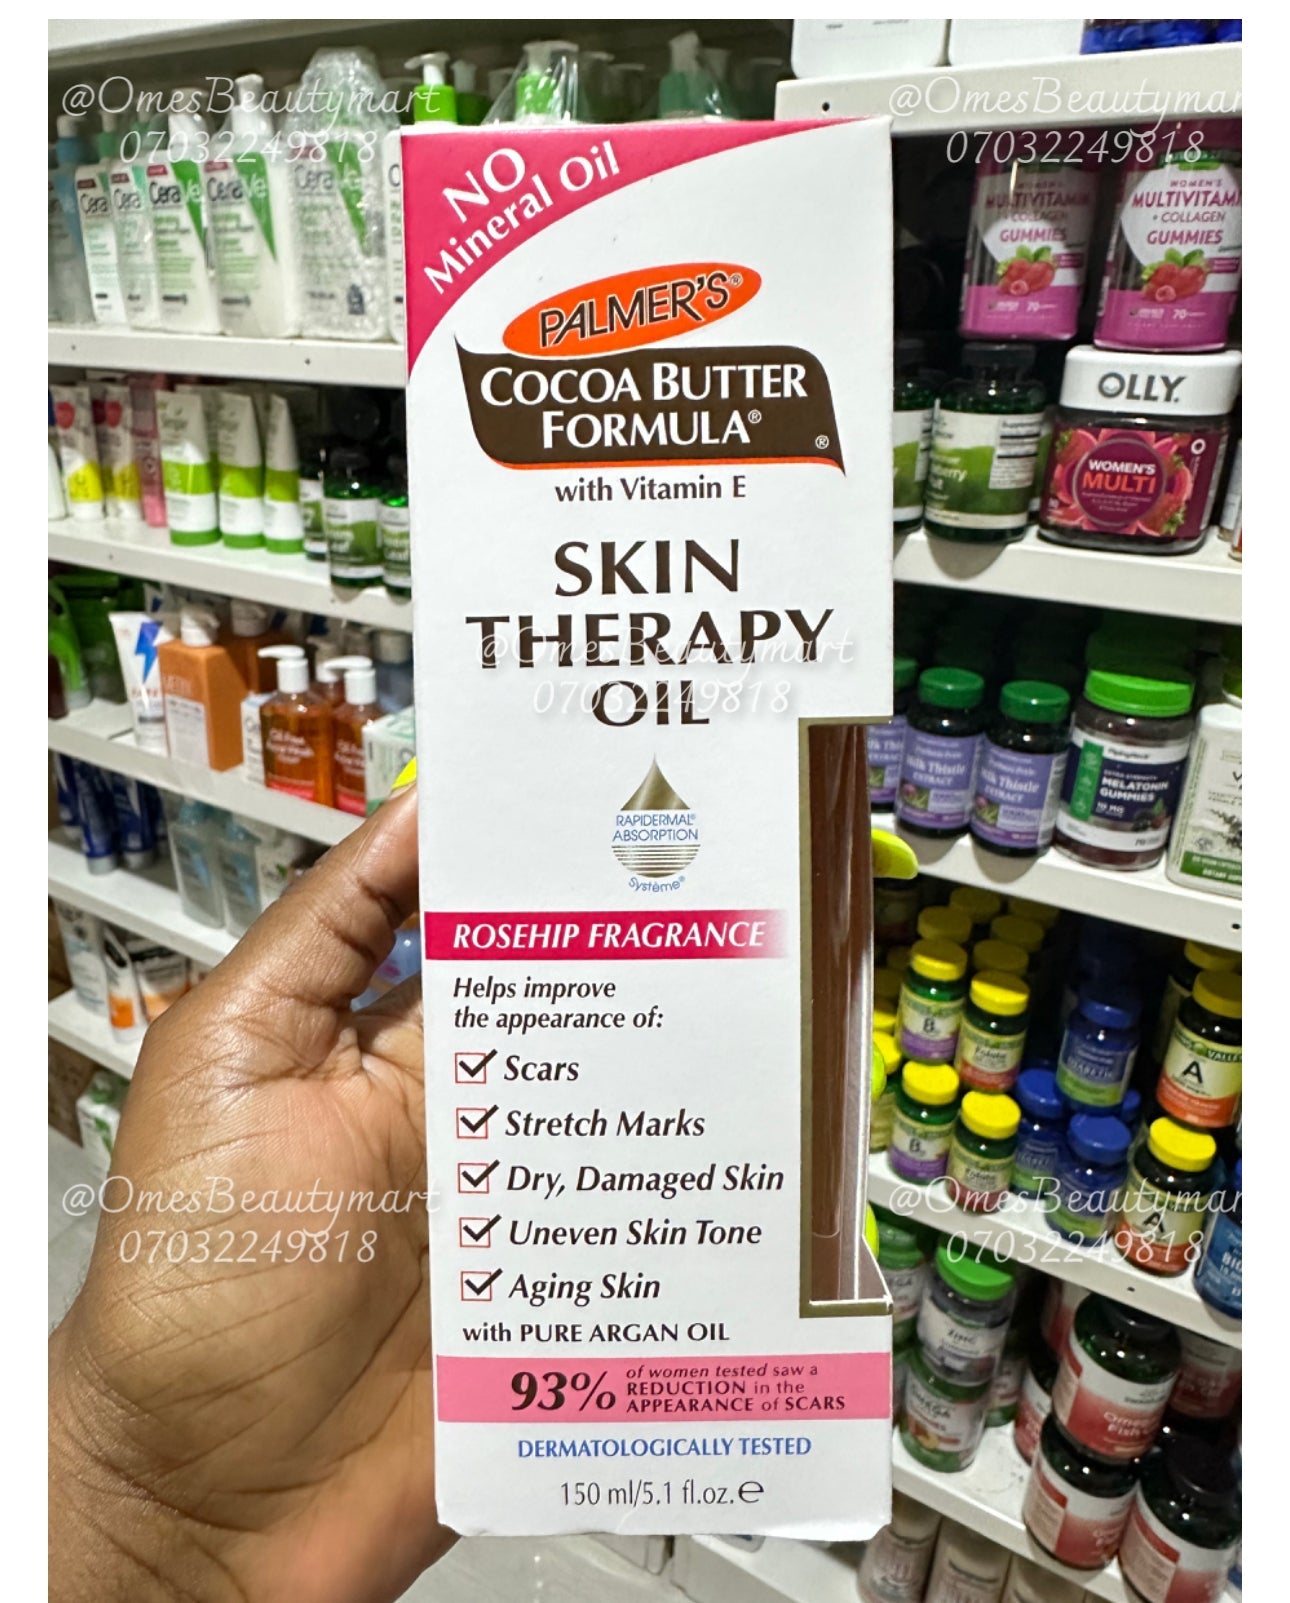 Palmer's Cocoa Butter Formula Skin Therapy Oil - 5.1 fl oz bottle